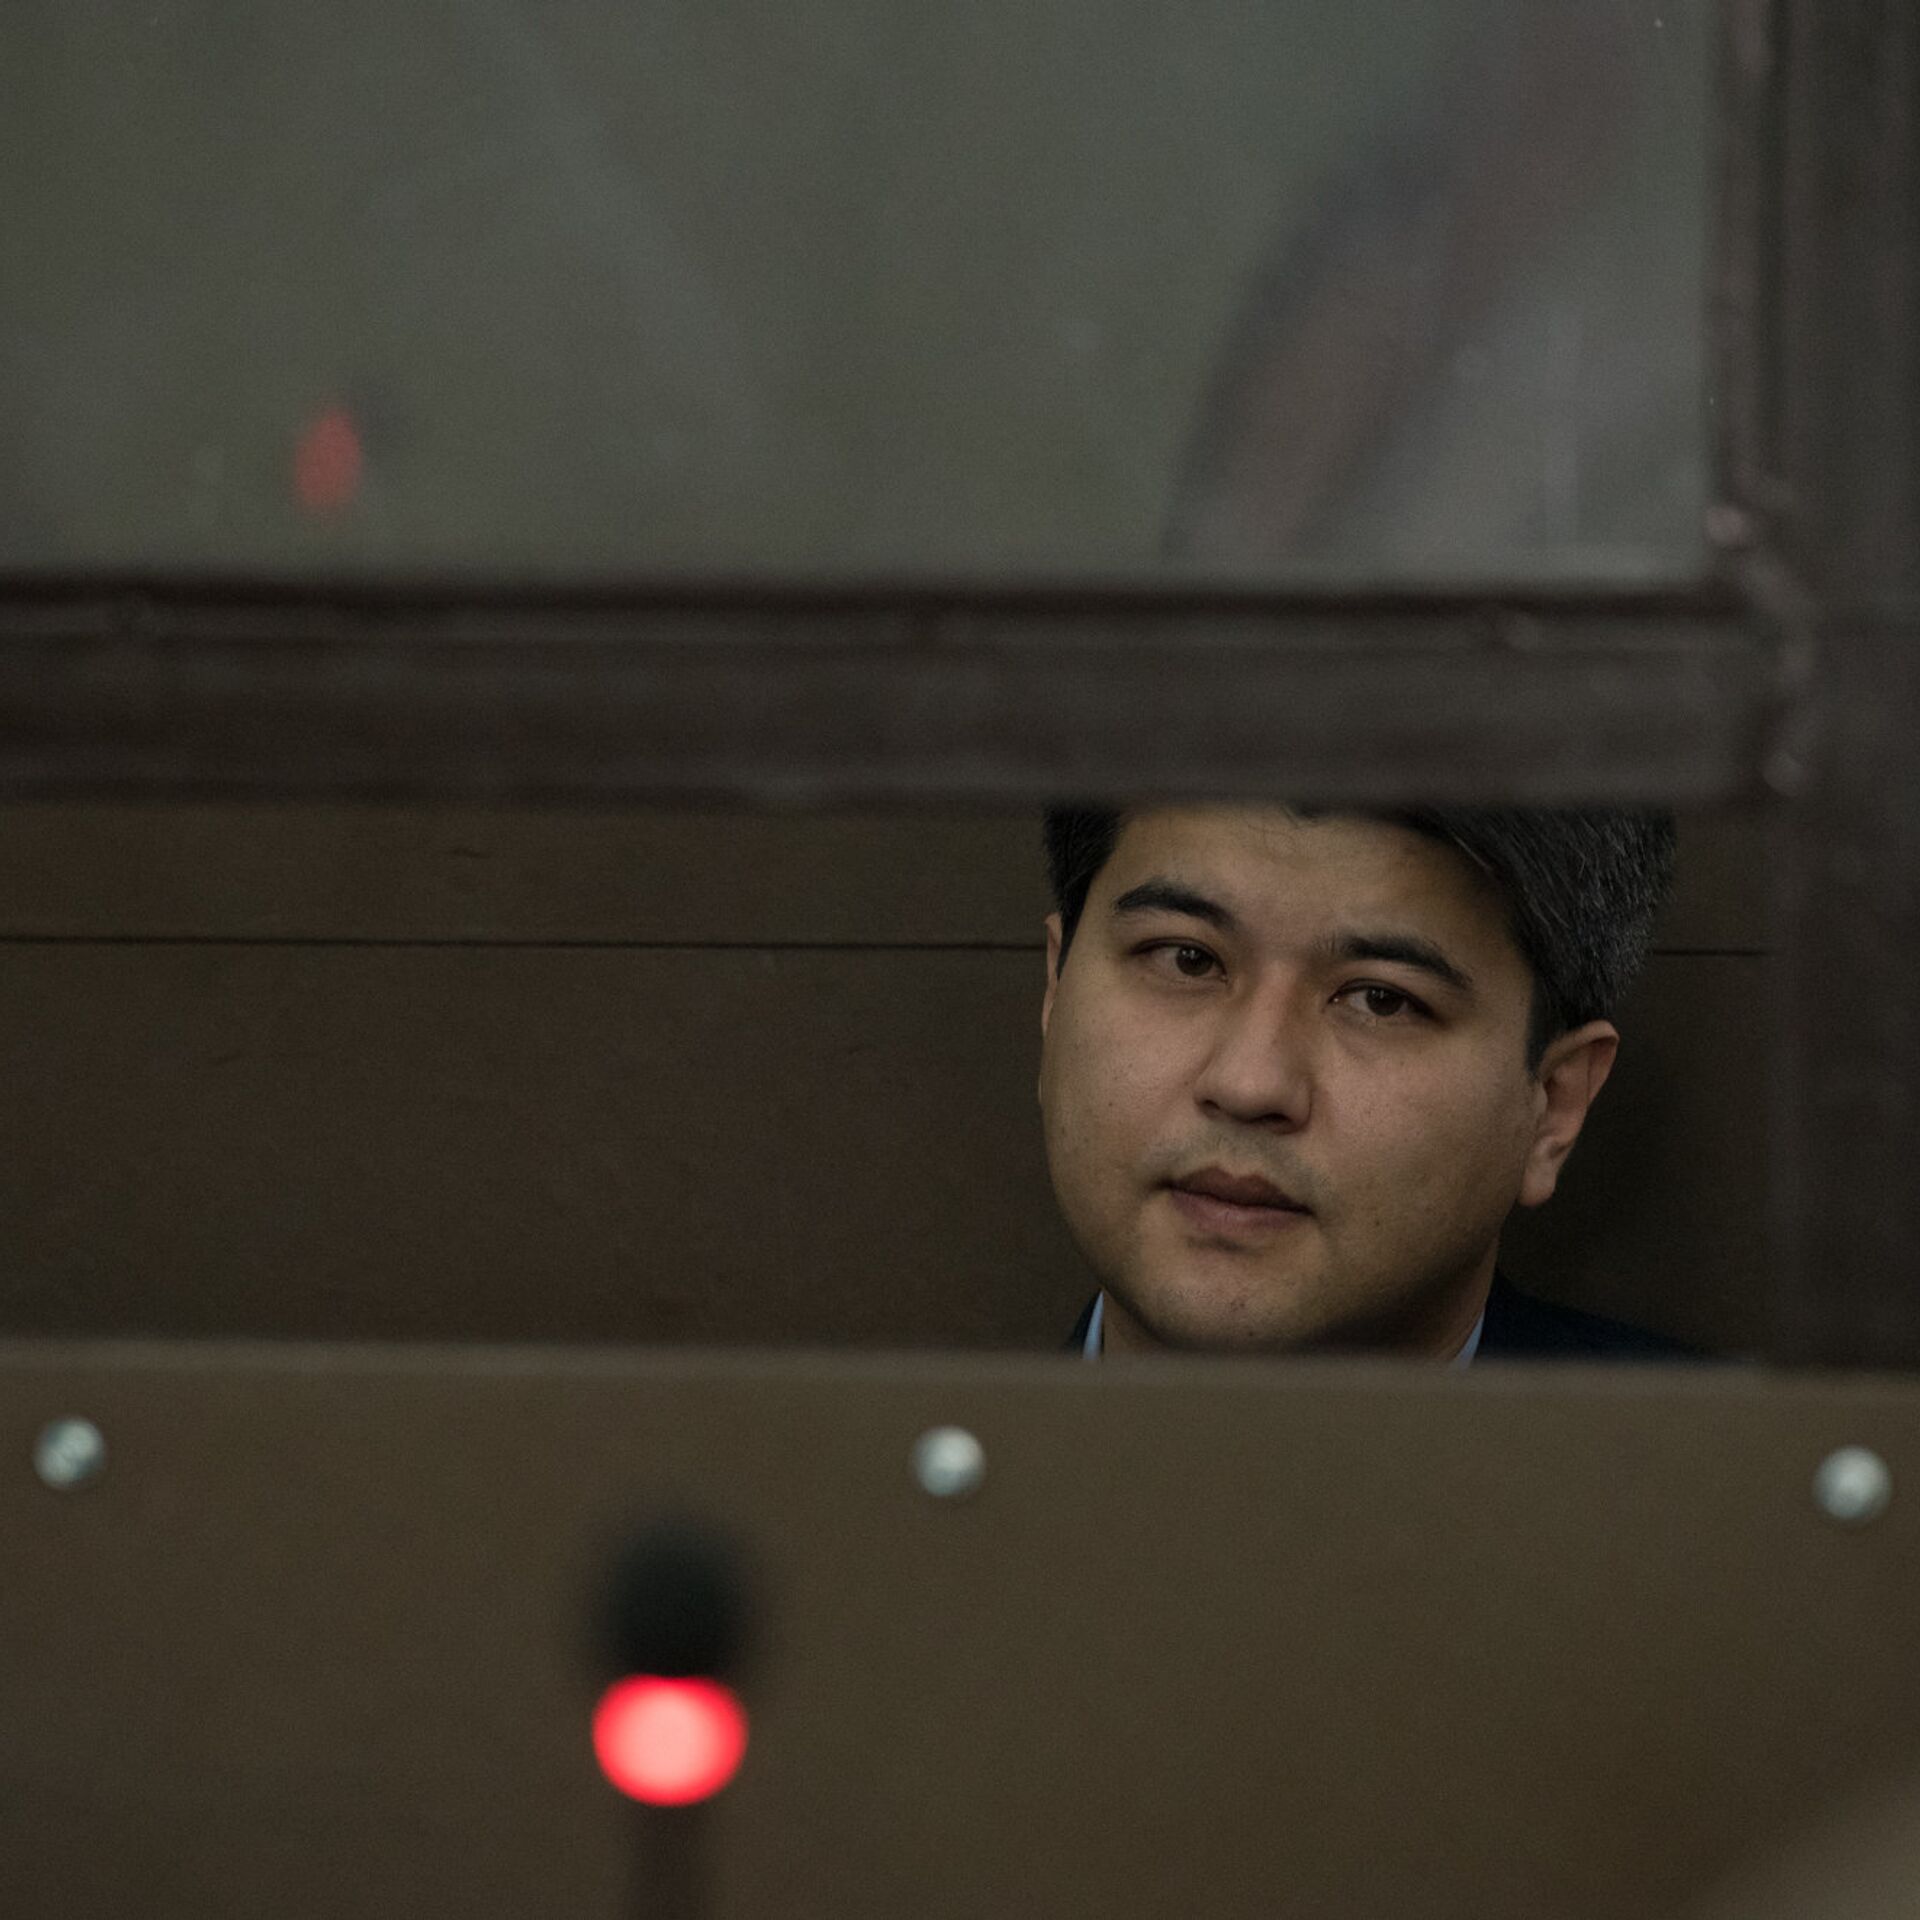 Закончился ли суд бишимбаева